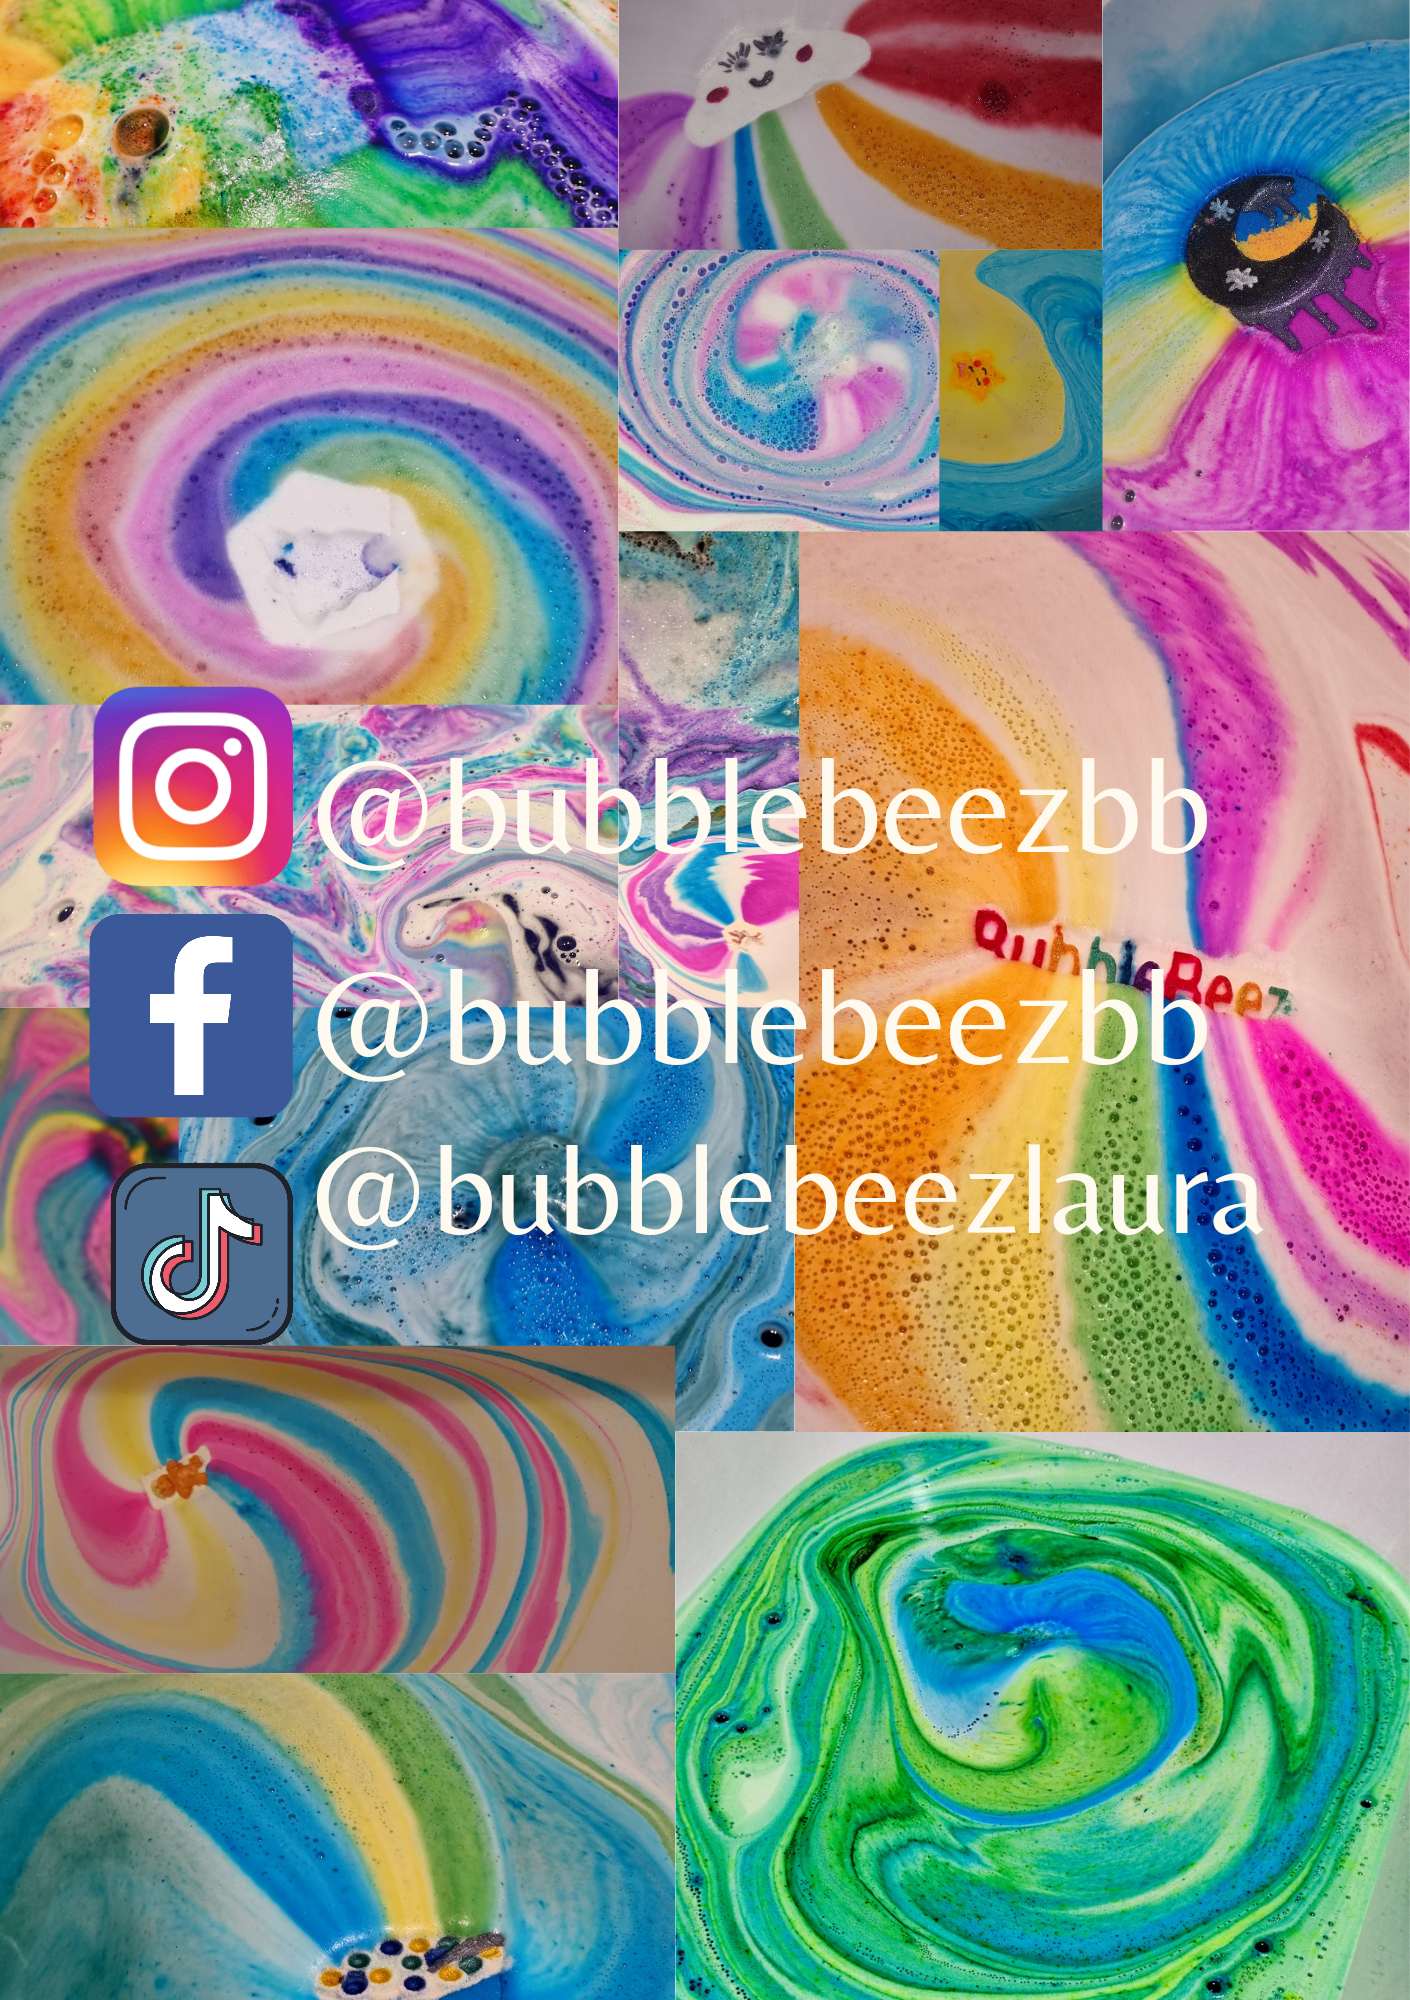 BubbleBeez bath art, bathbombs in action. BubbleBeez social media handles 